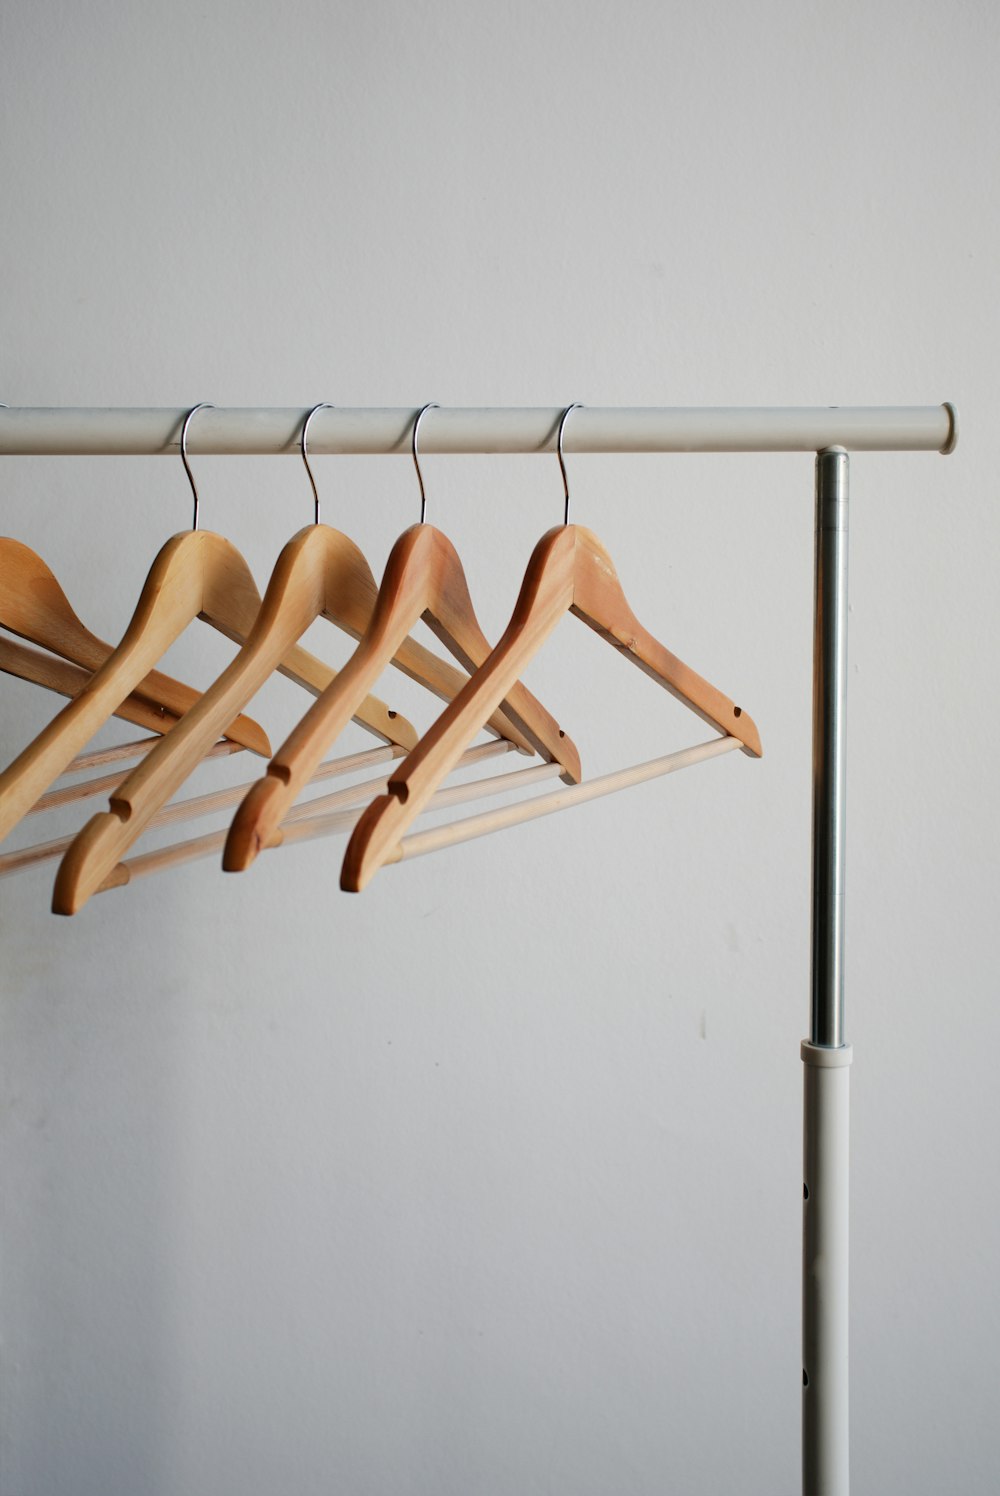 500+ Clothes Hanger Pictures | Download Free Images on Unsplash